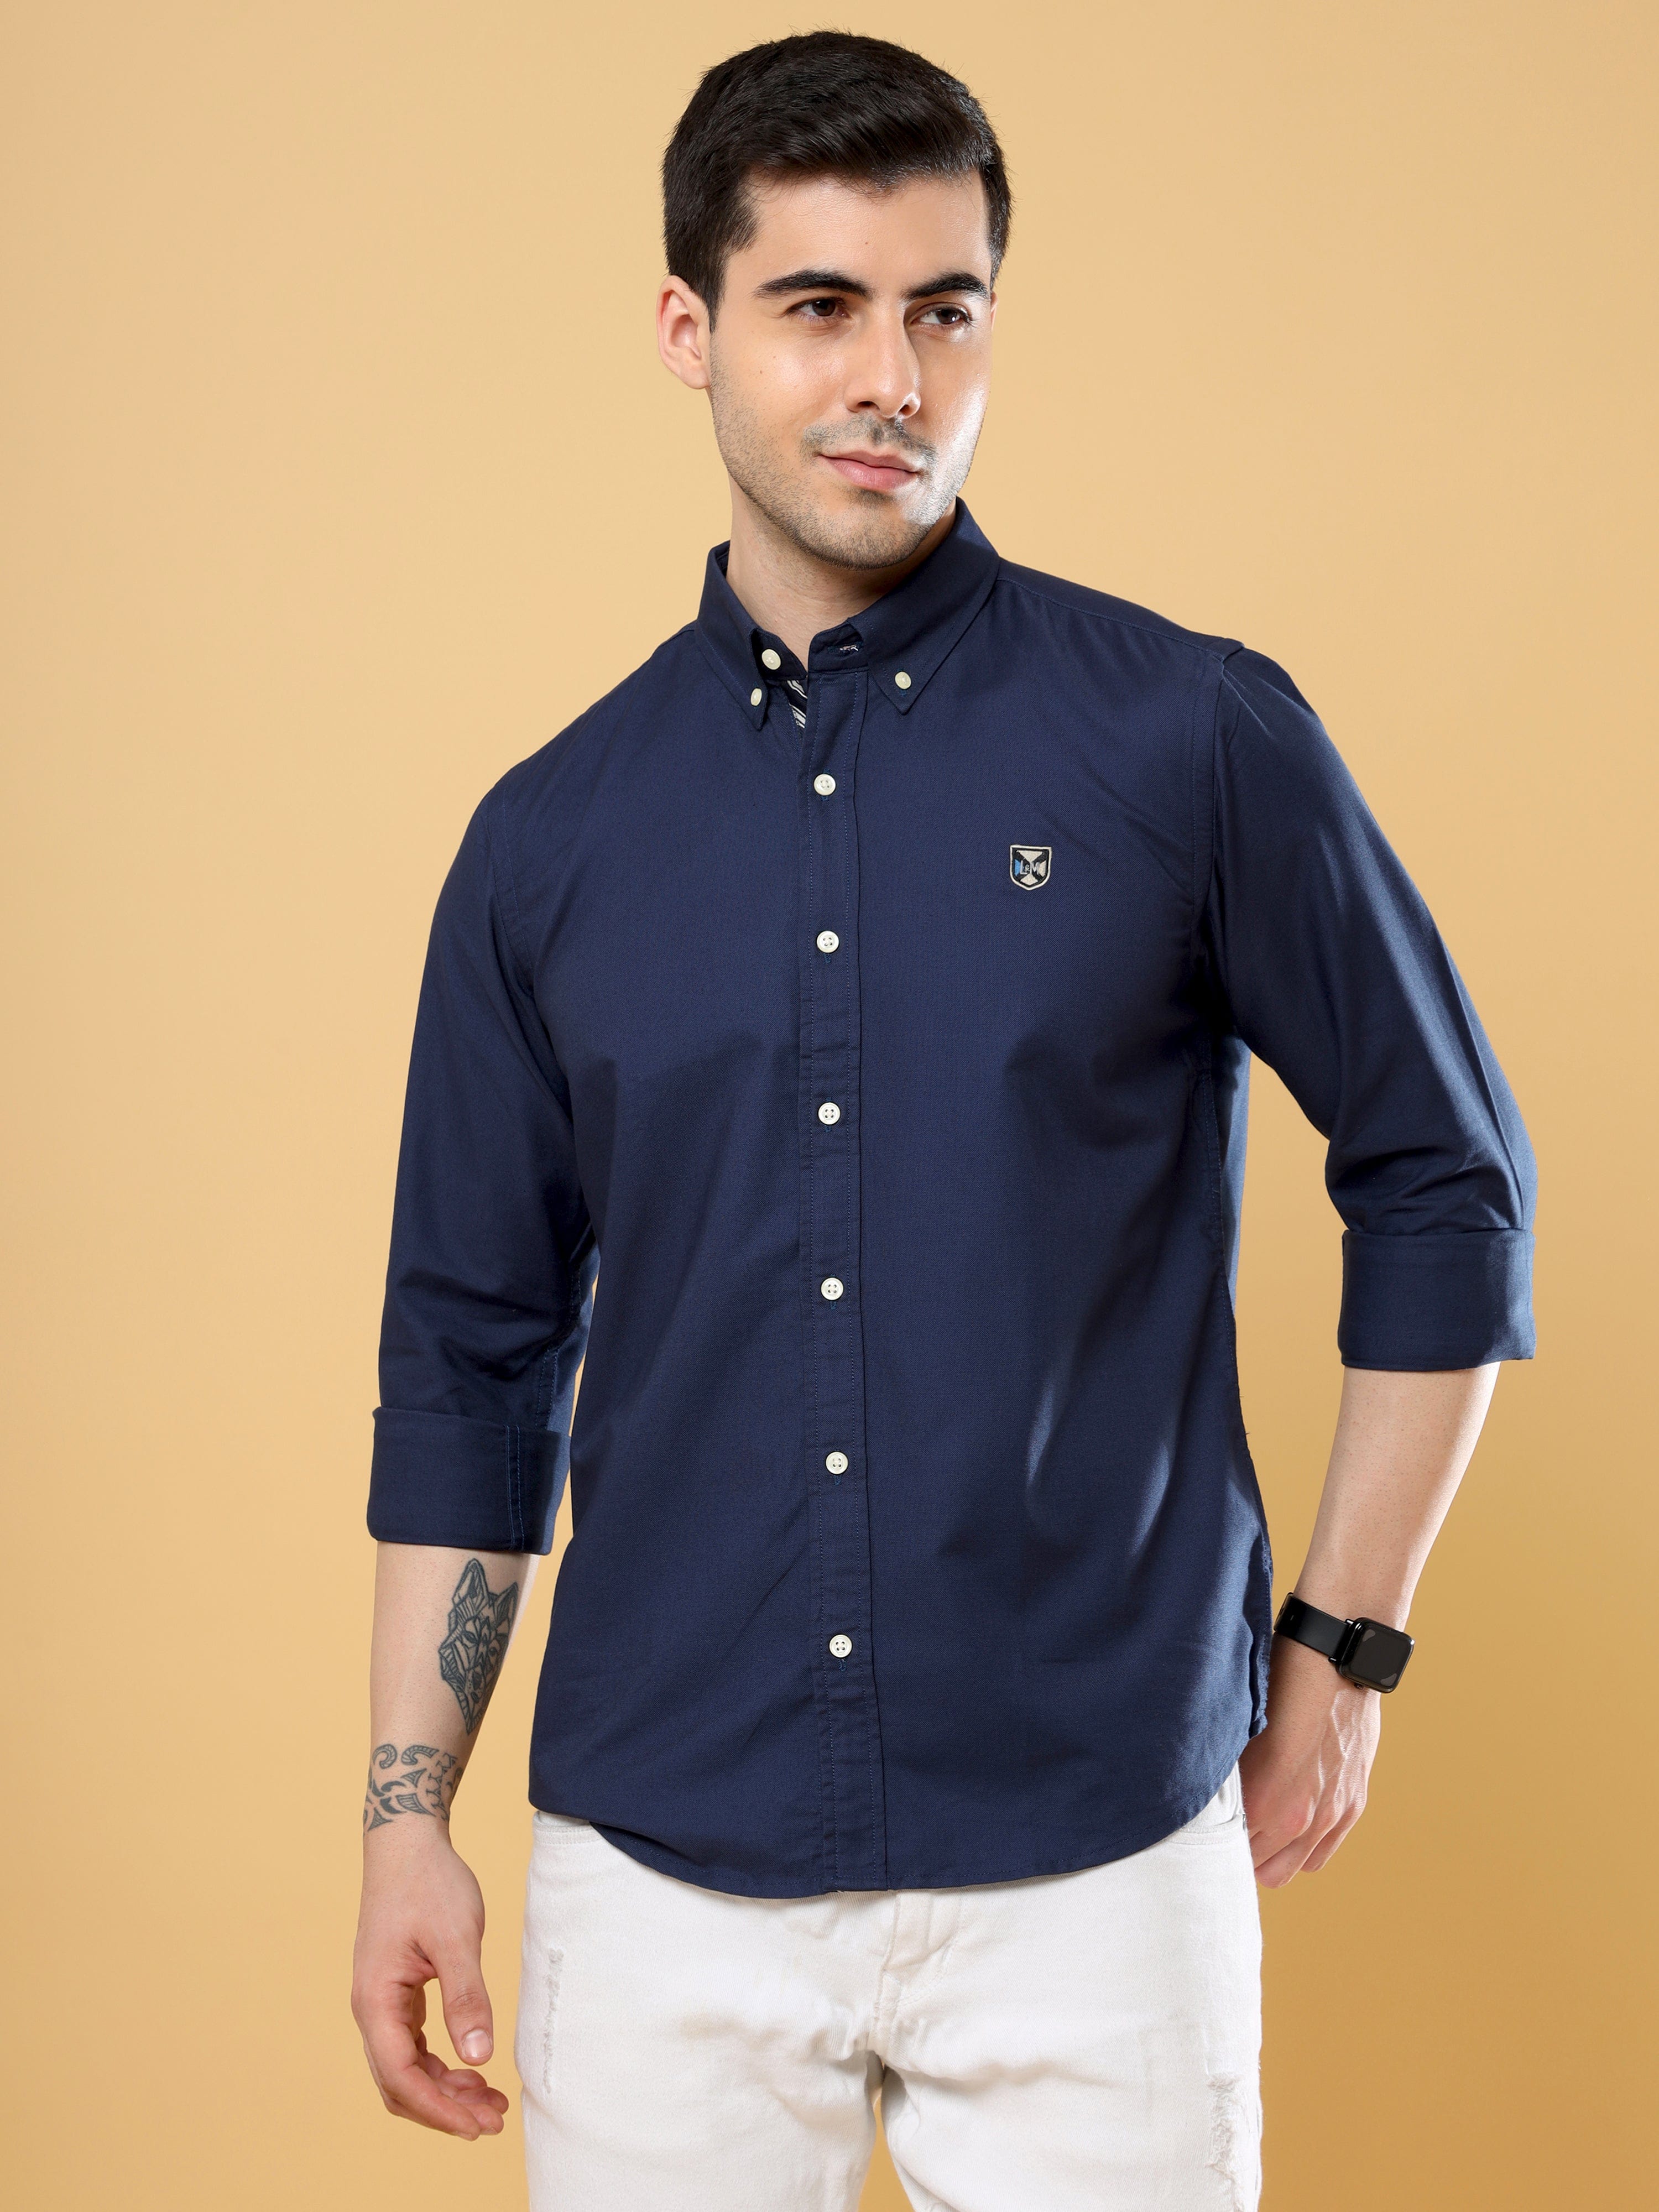 Navy Blue Button Down Oxford Shirt